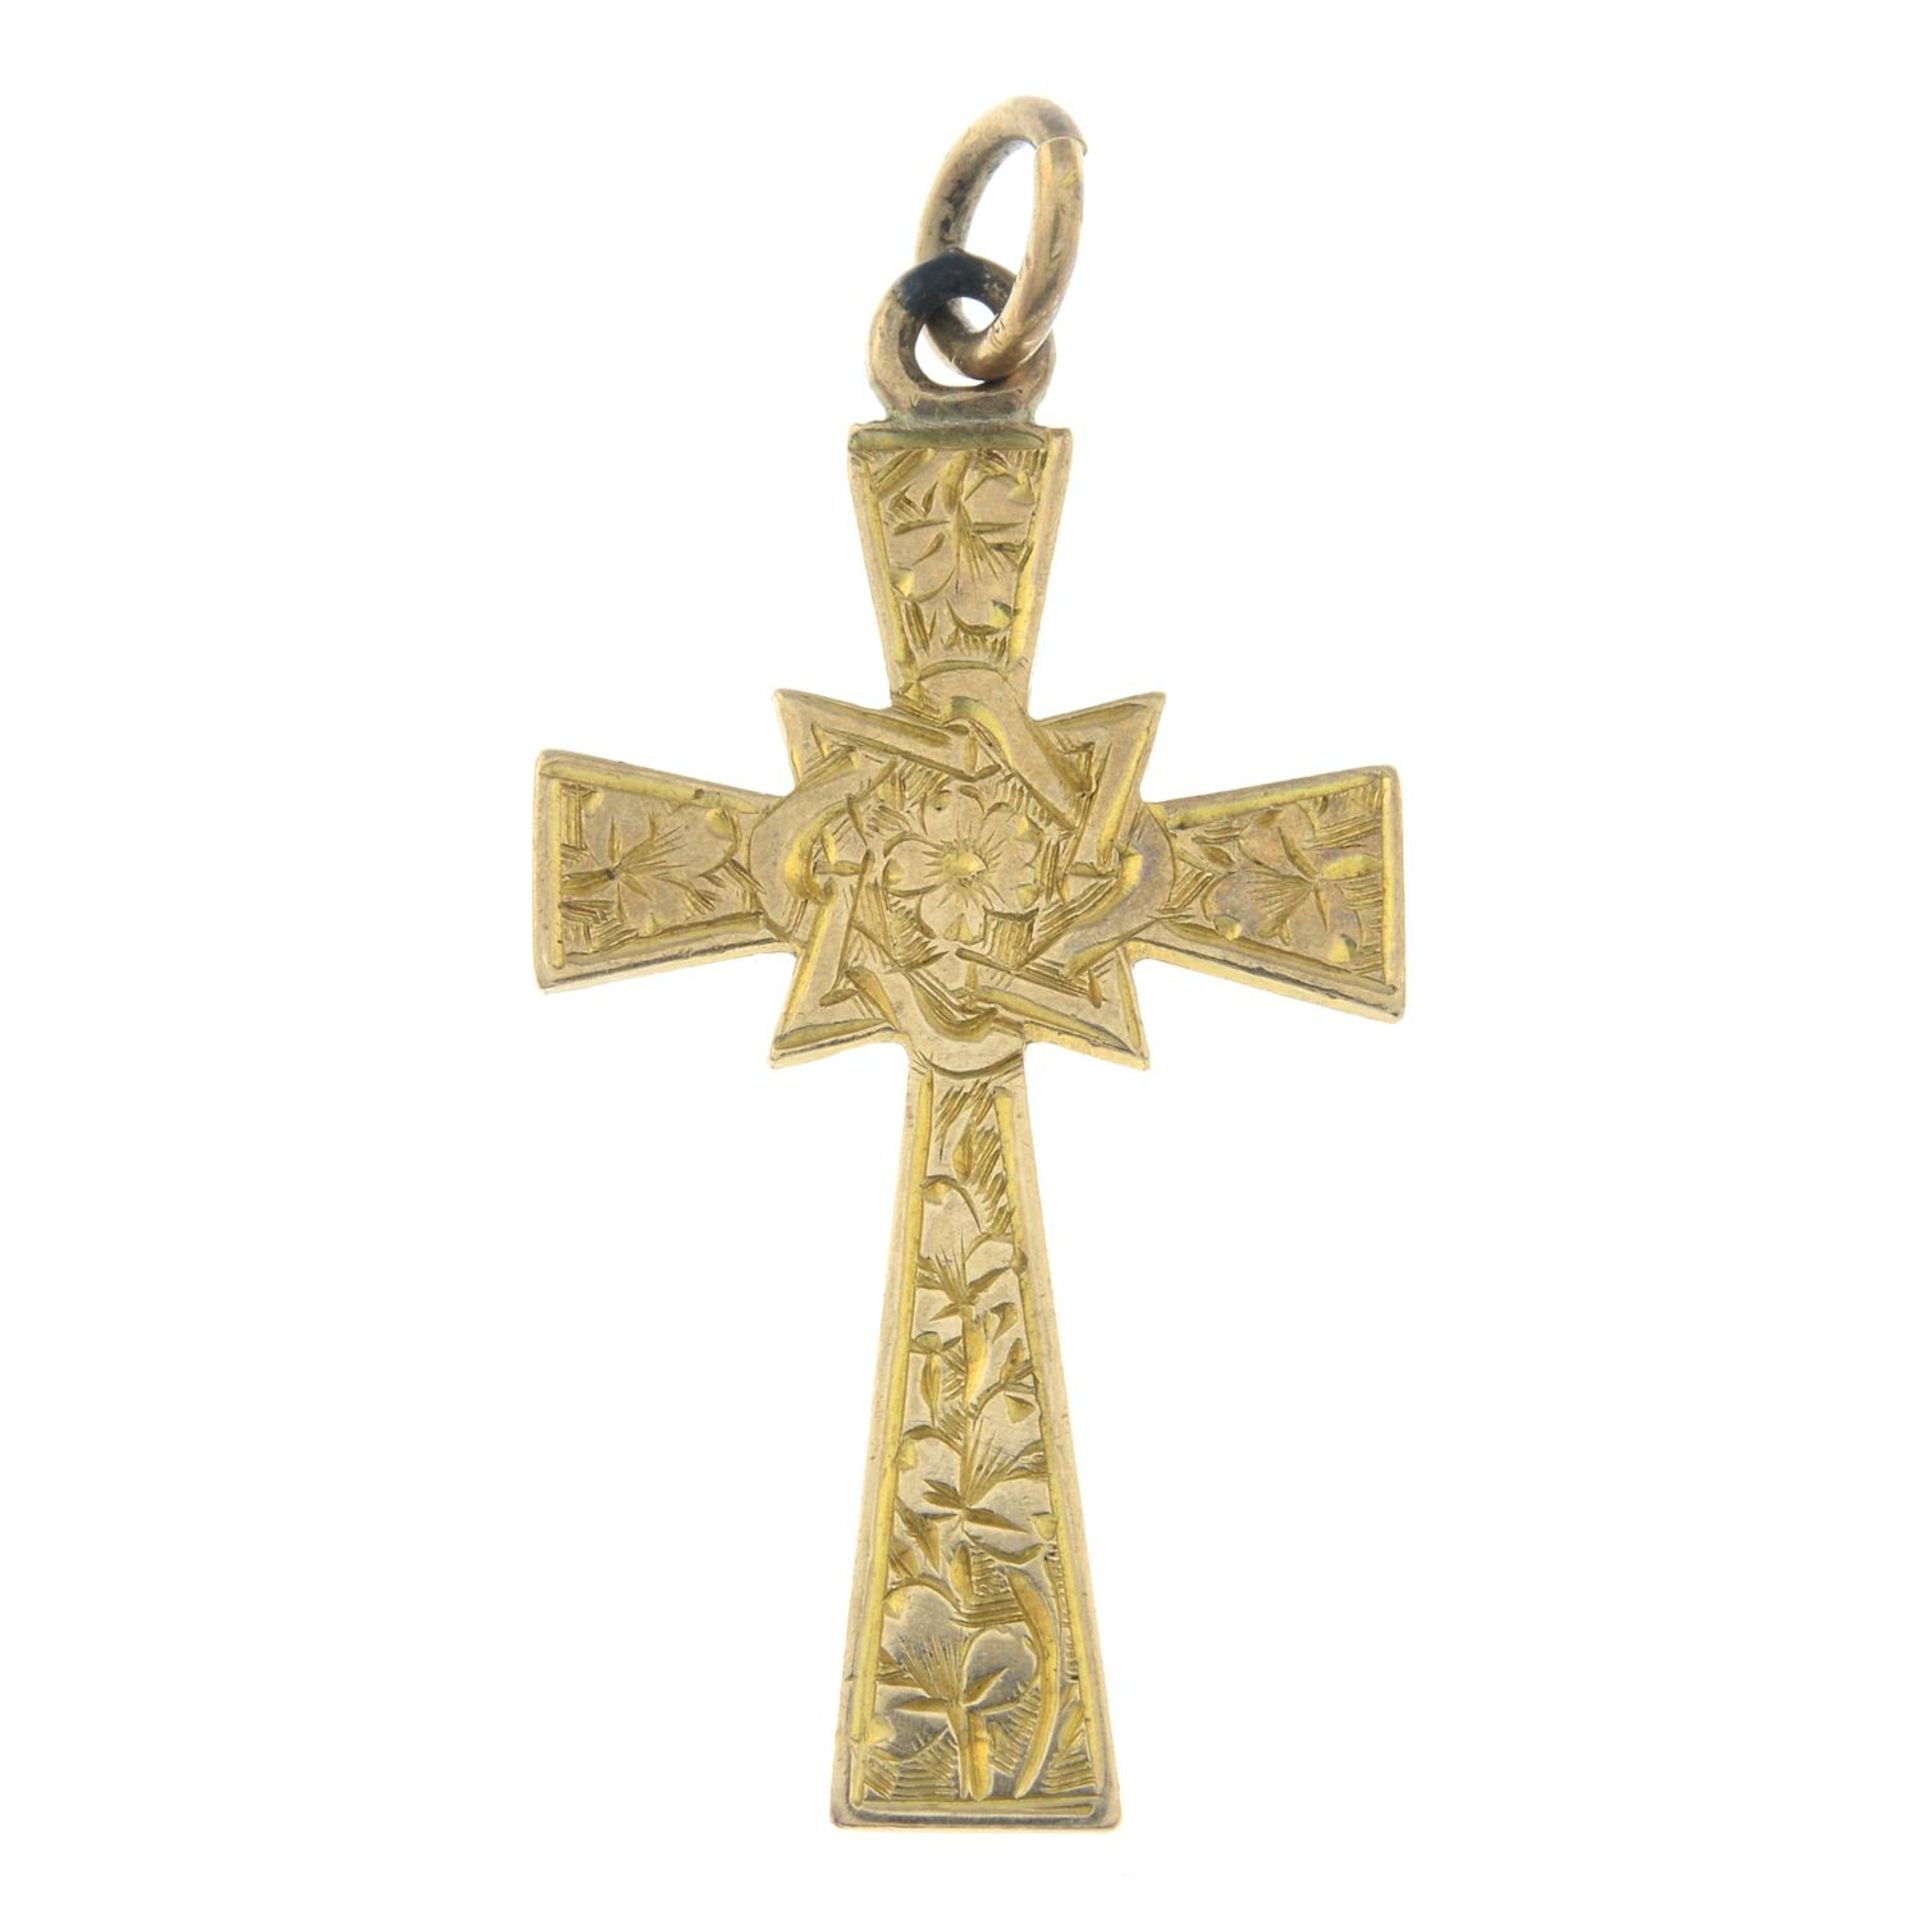 An Edwardian 9ct gold engraved floral motif cross pendant.